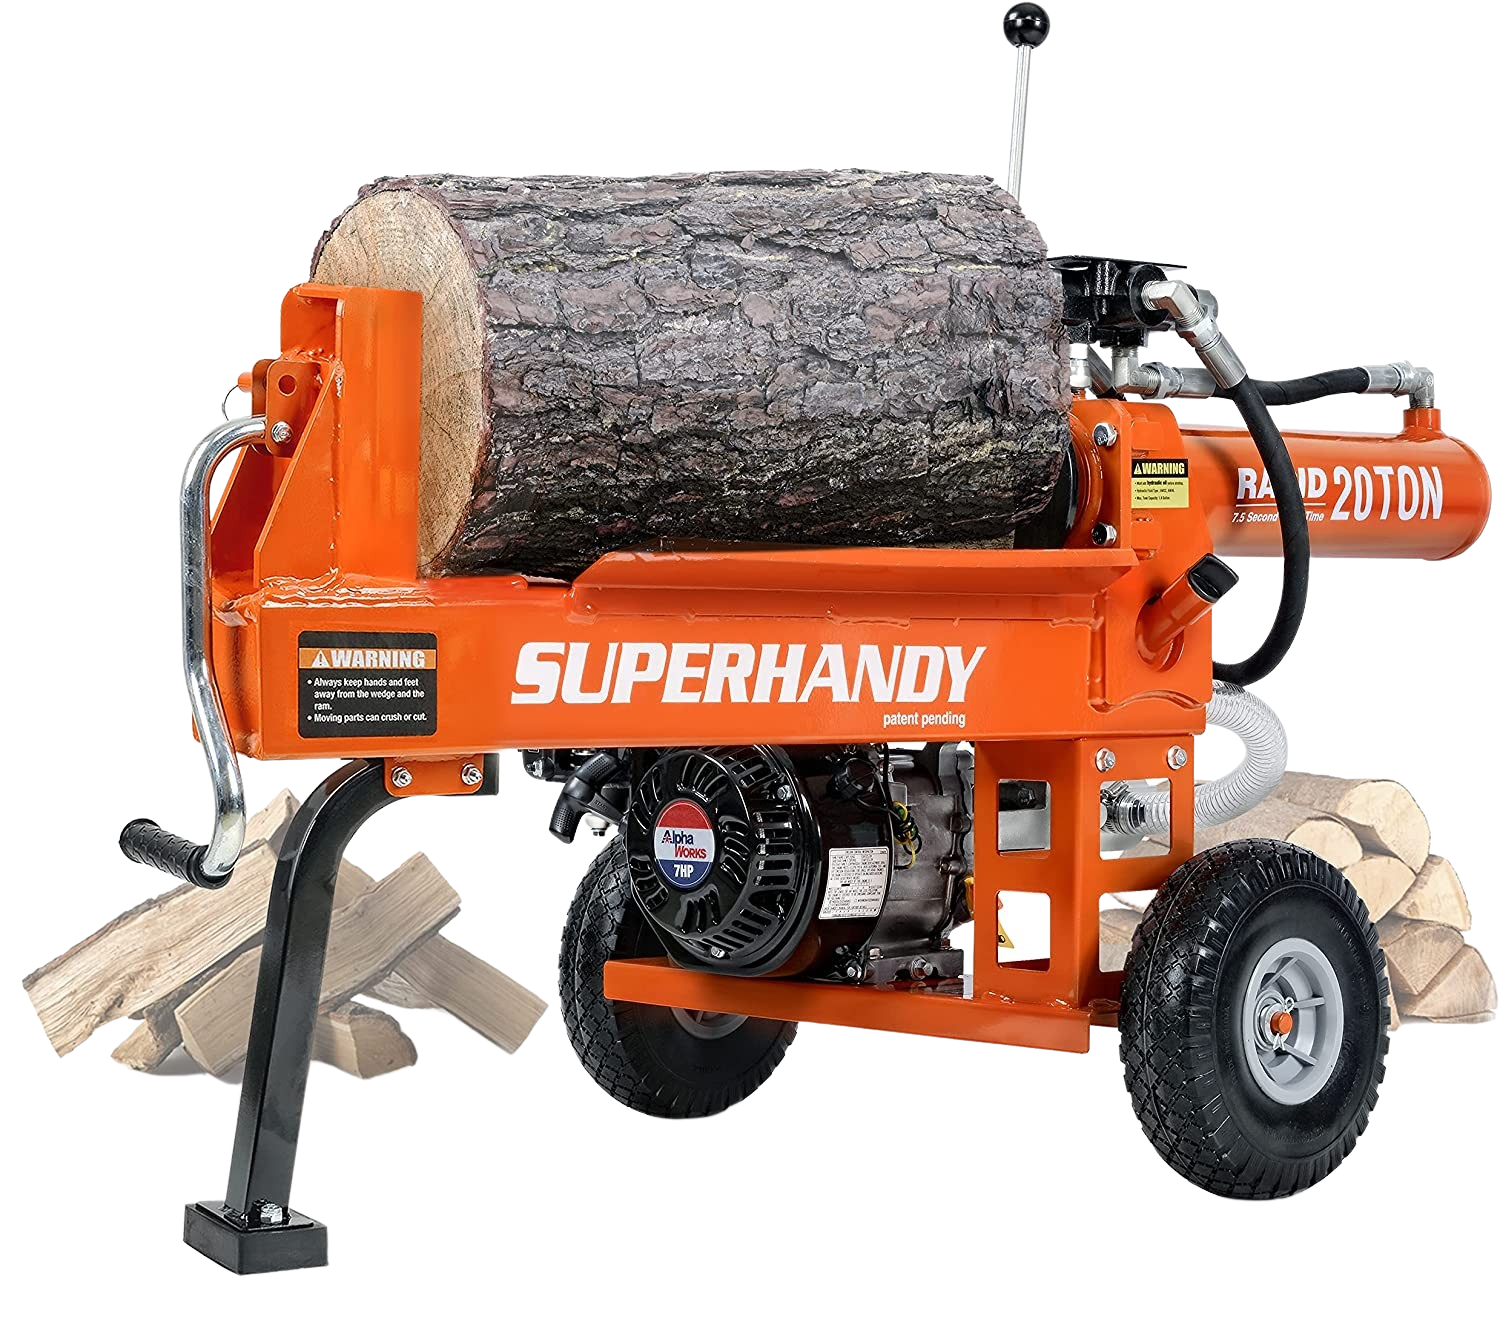 Super Handy, Super Handy GUO077 Portable 20 Ton Gas Powered Log Splitter New